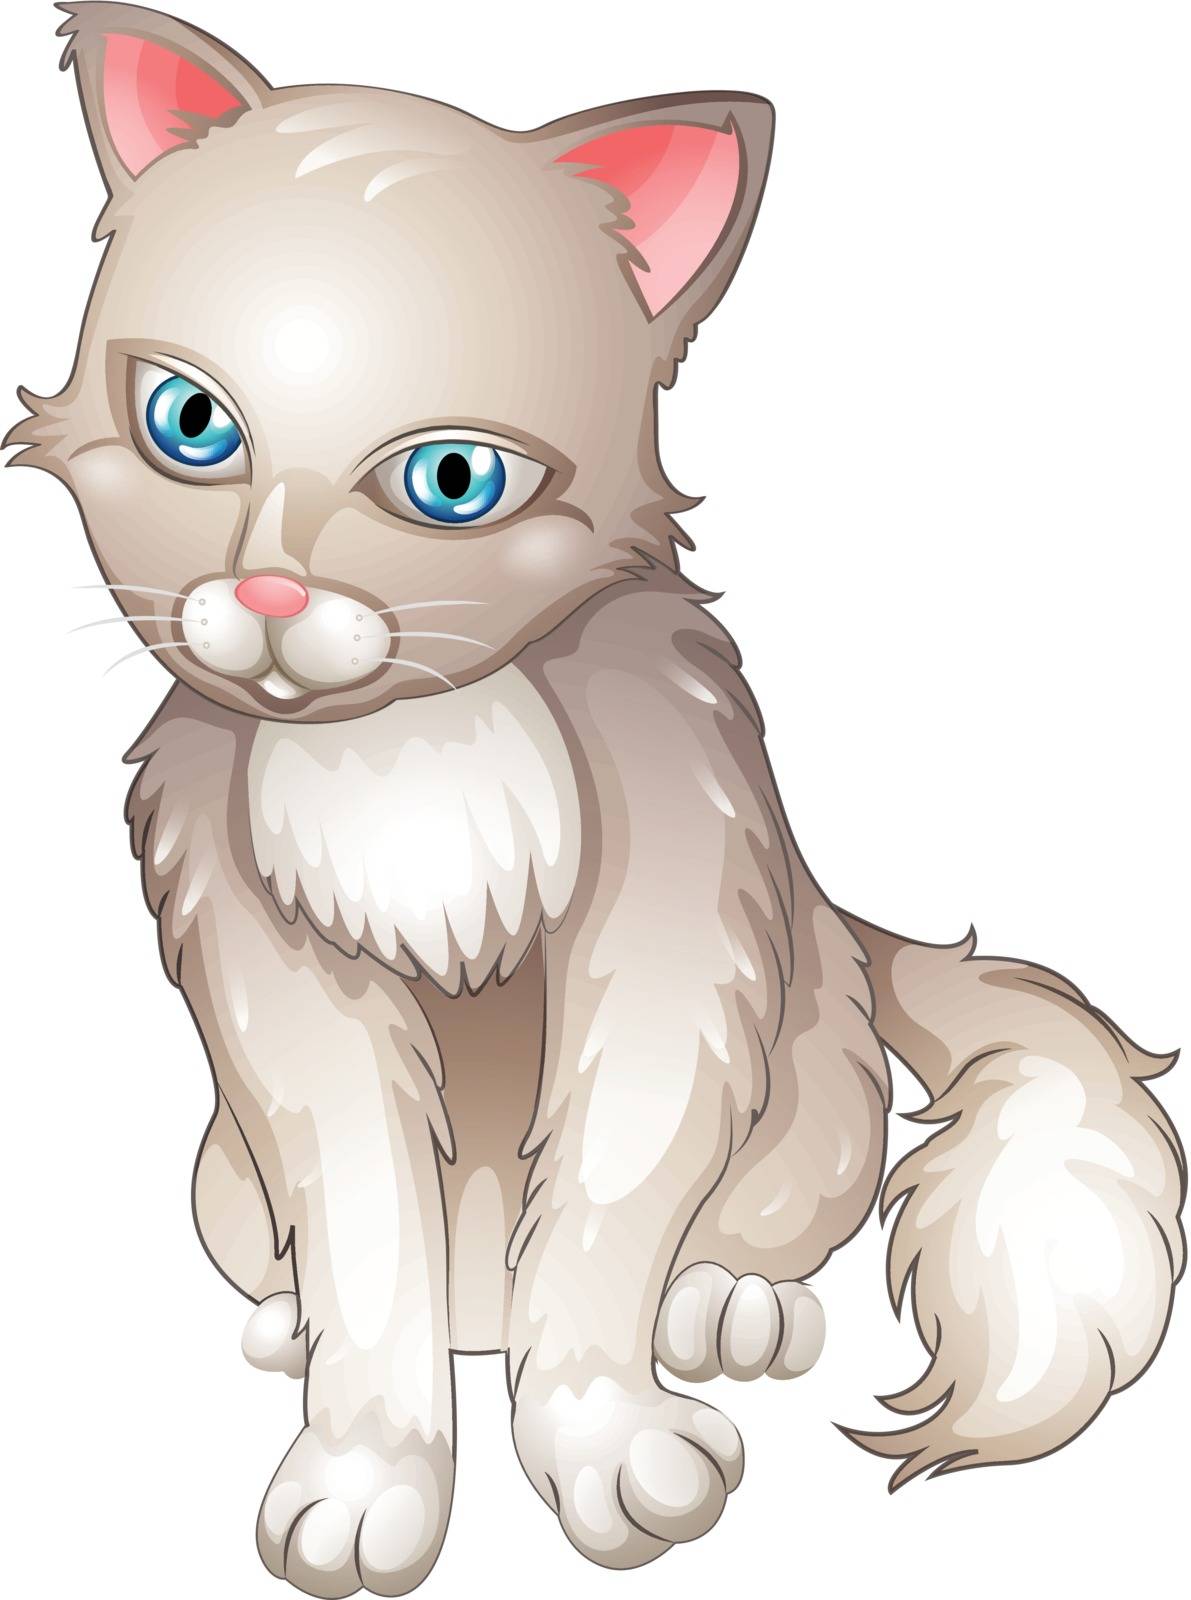 Illustration of a sad cat on a white background